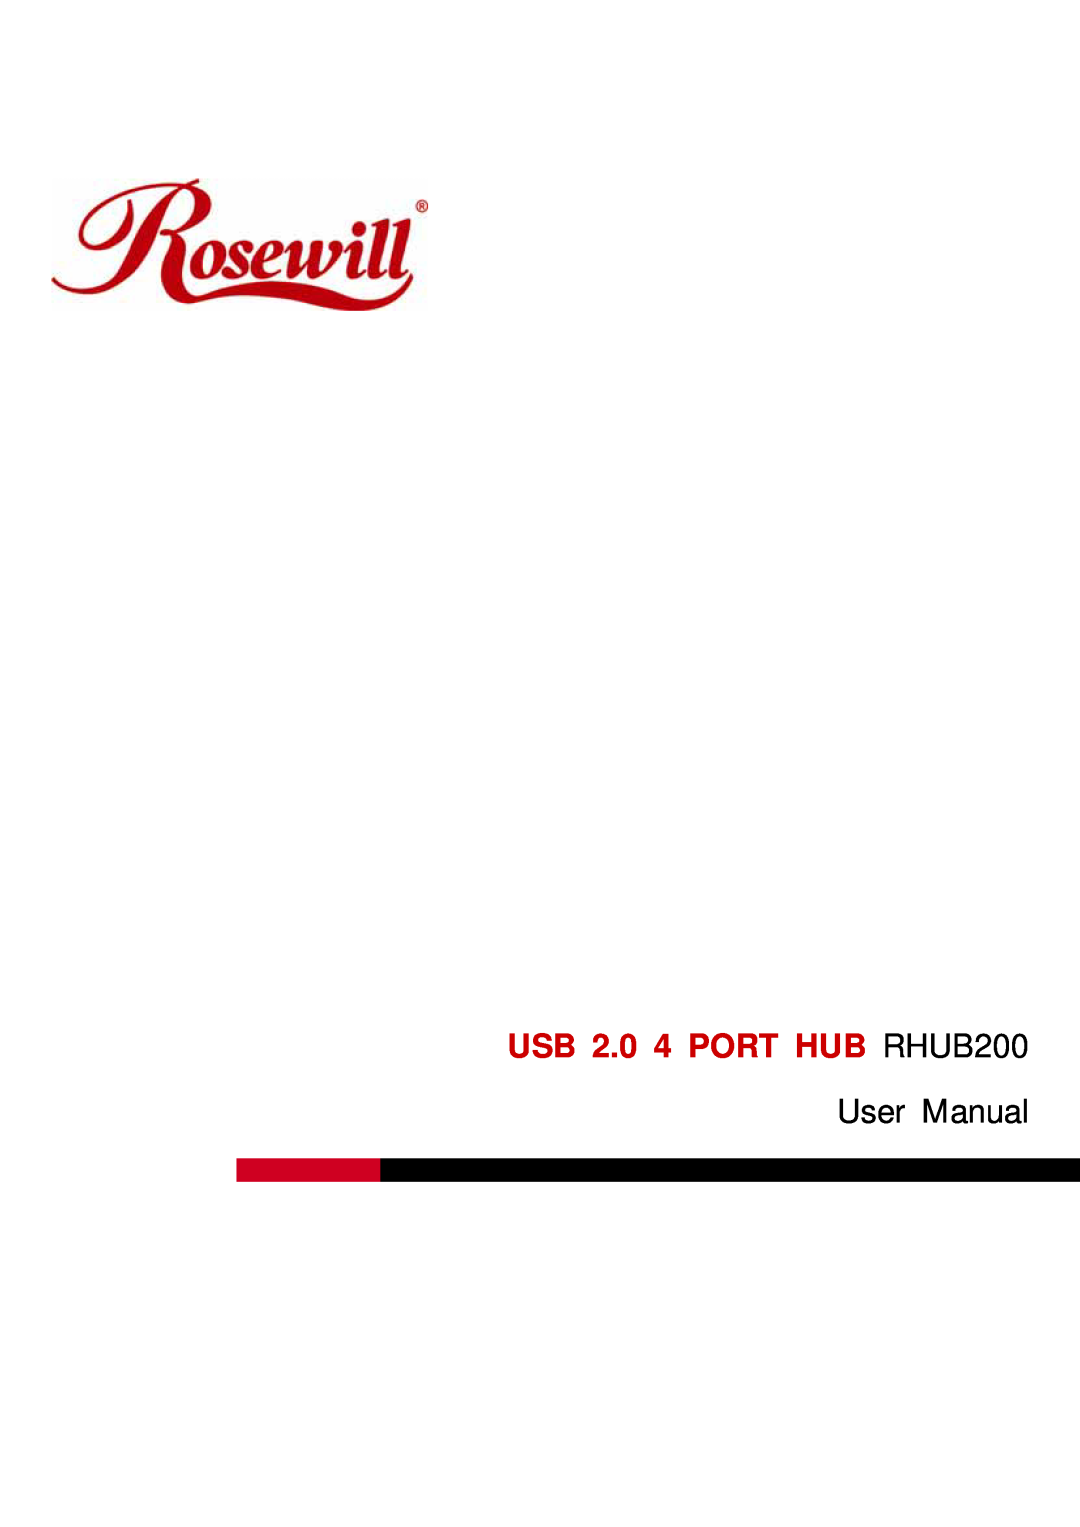 Rosewill RHUB-200 user manual USB 2.0 4 PORT HUB RHUB200, User Manual 